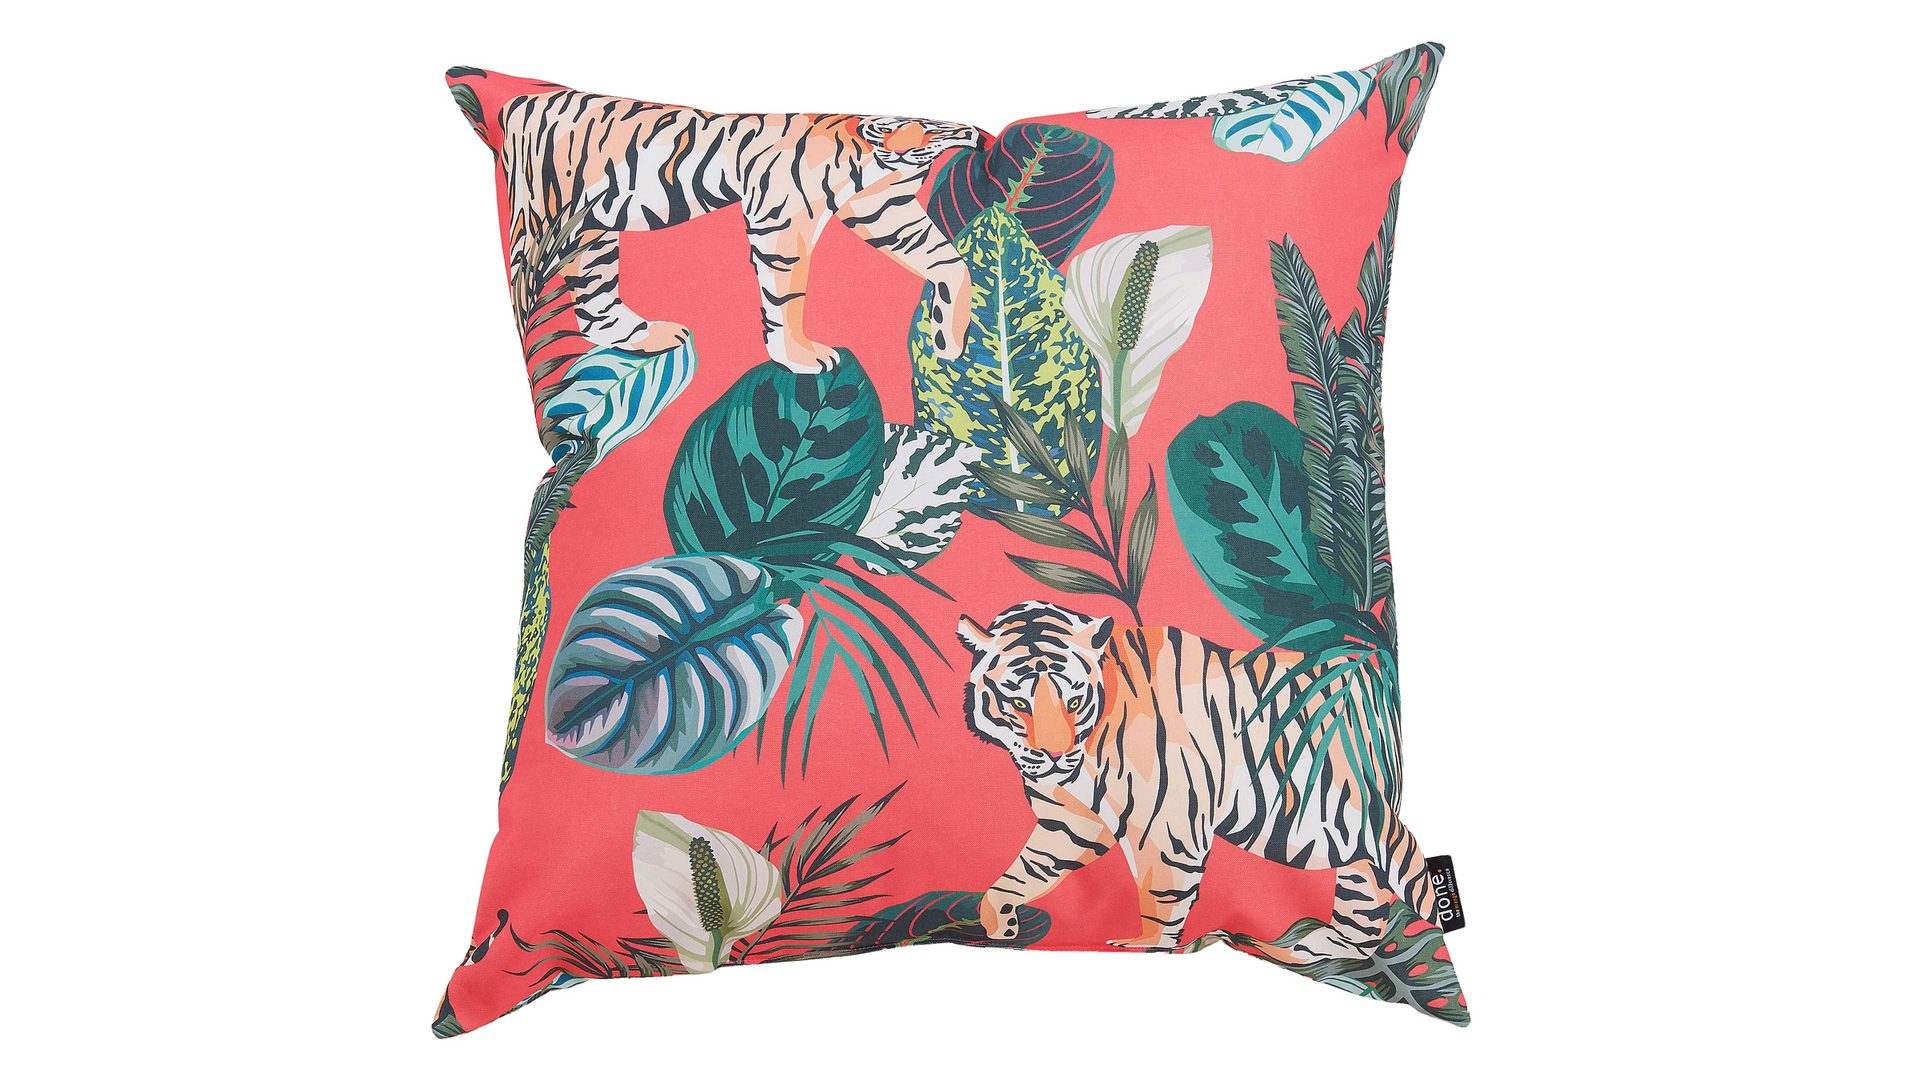 Einzelkissen Done® by karabel home company aus Kunstfaser in Orange DONE® Kissen Cushion Outside Tiger Dessin Tiger – ca. 65 x 65 cm